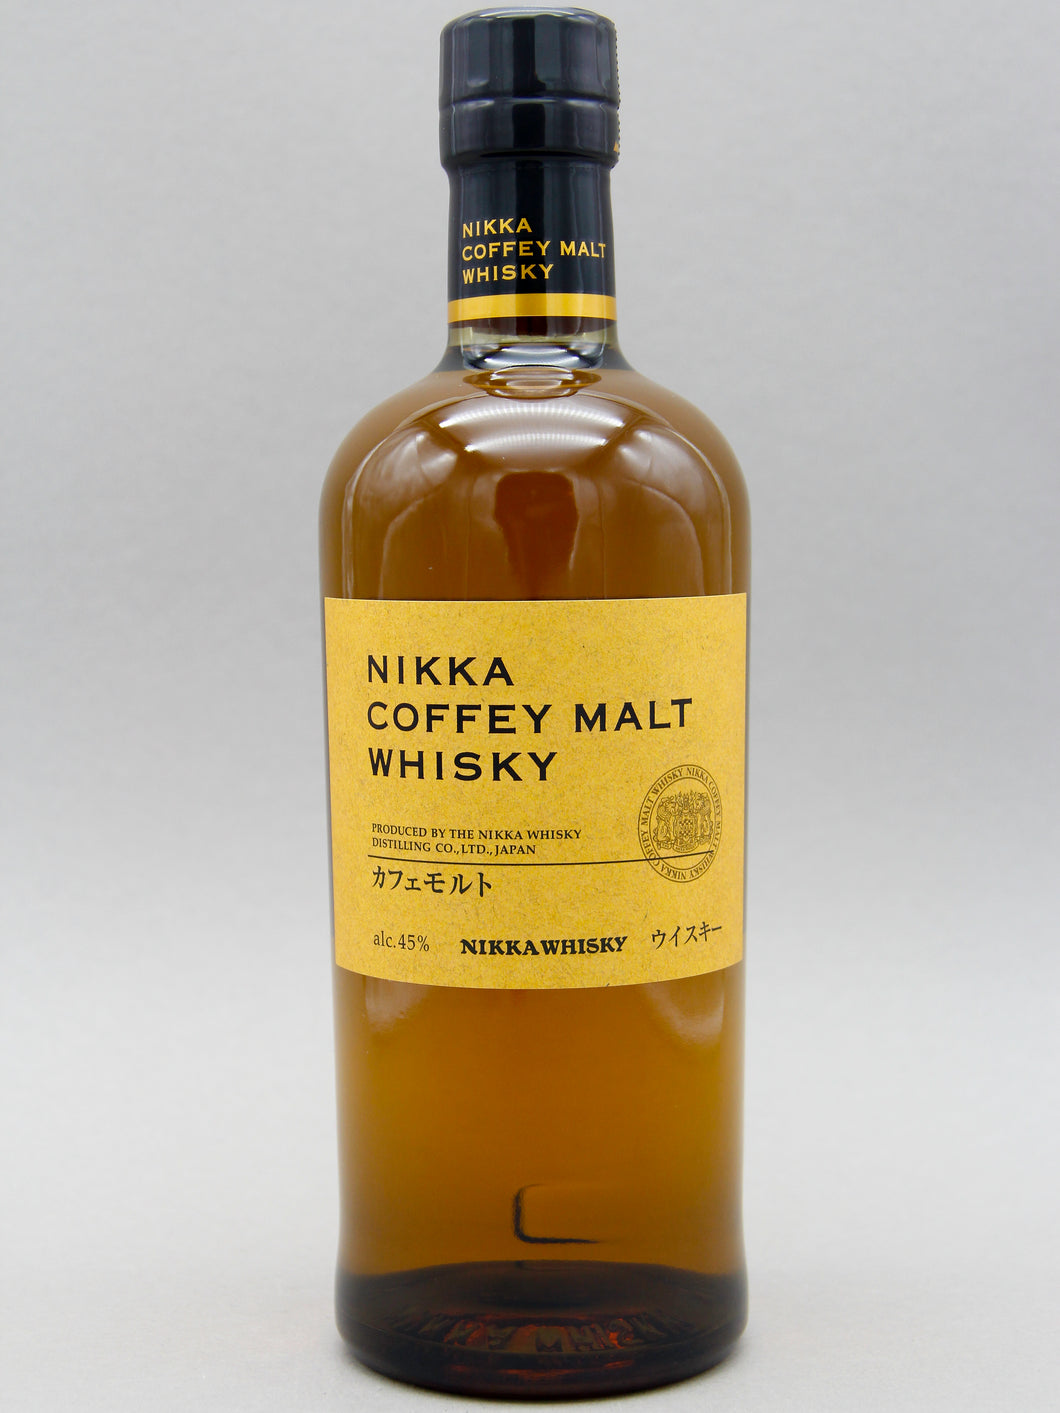 Nikka Whisky Coffey Malt, Japan (45%, 70cl)